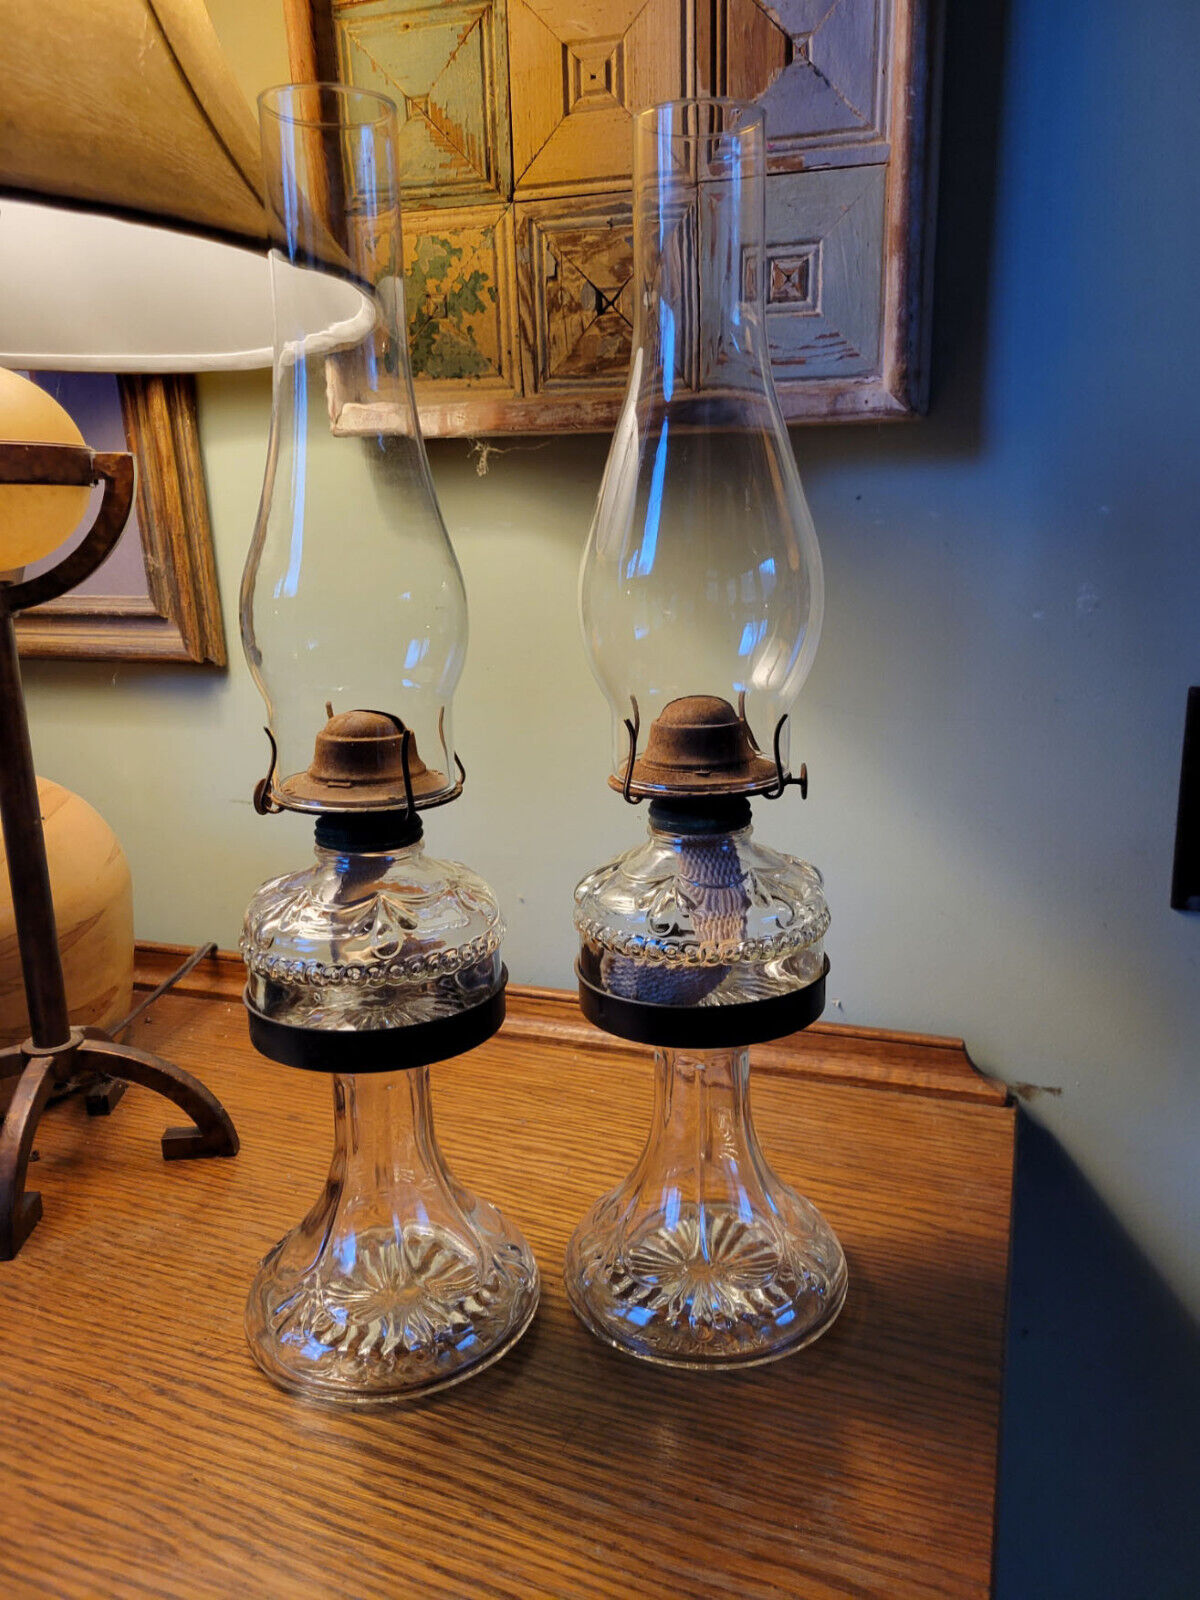 A Stunning Pair of Kerosene Lamps - Ambience - Style - Beauty